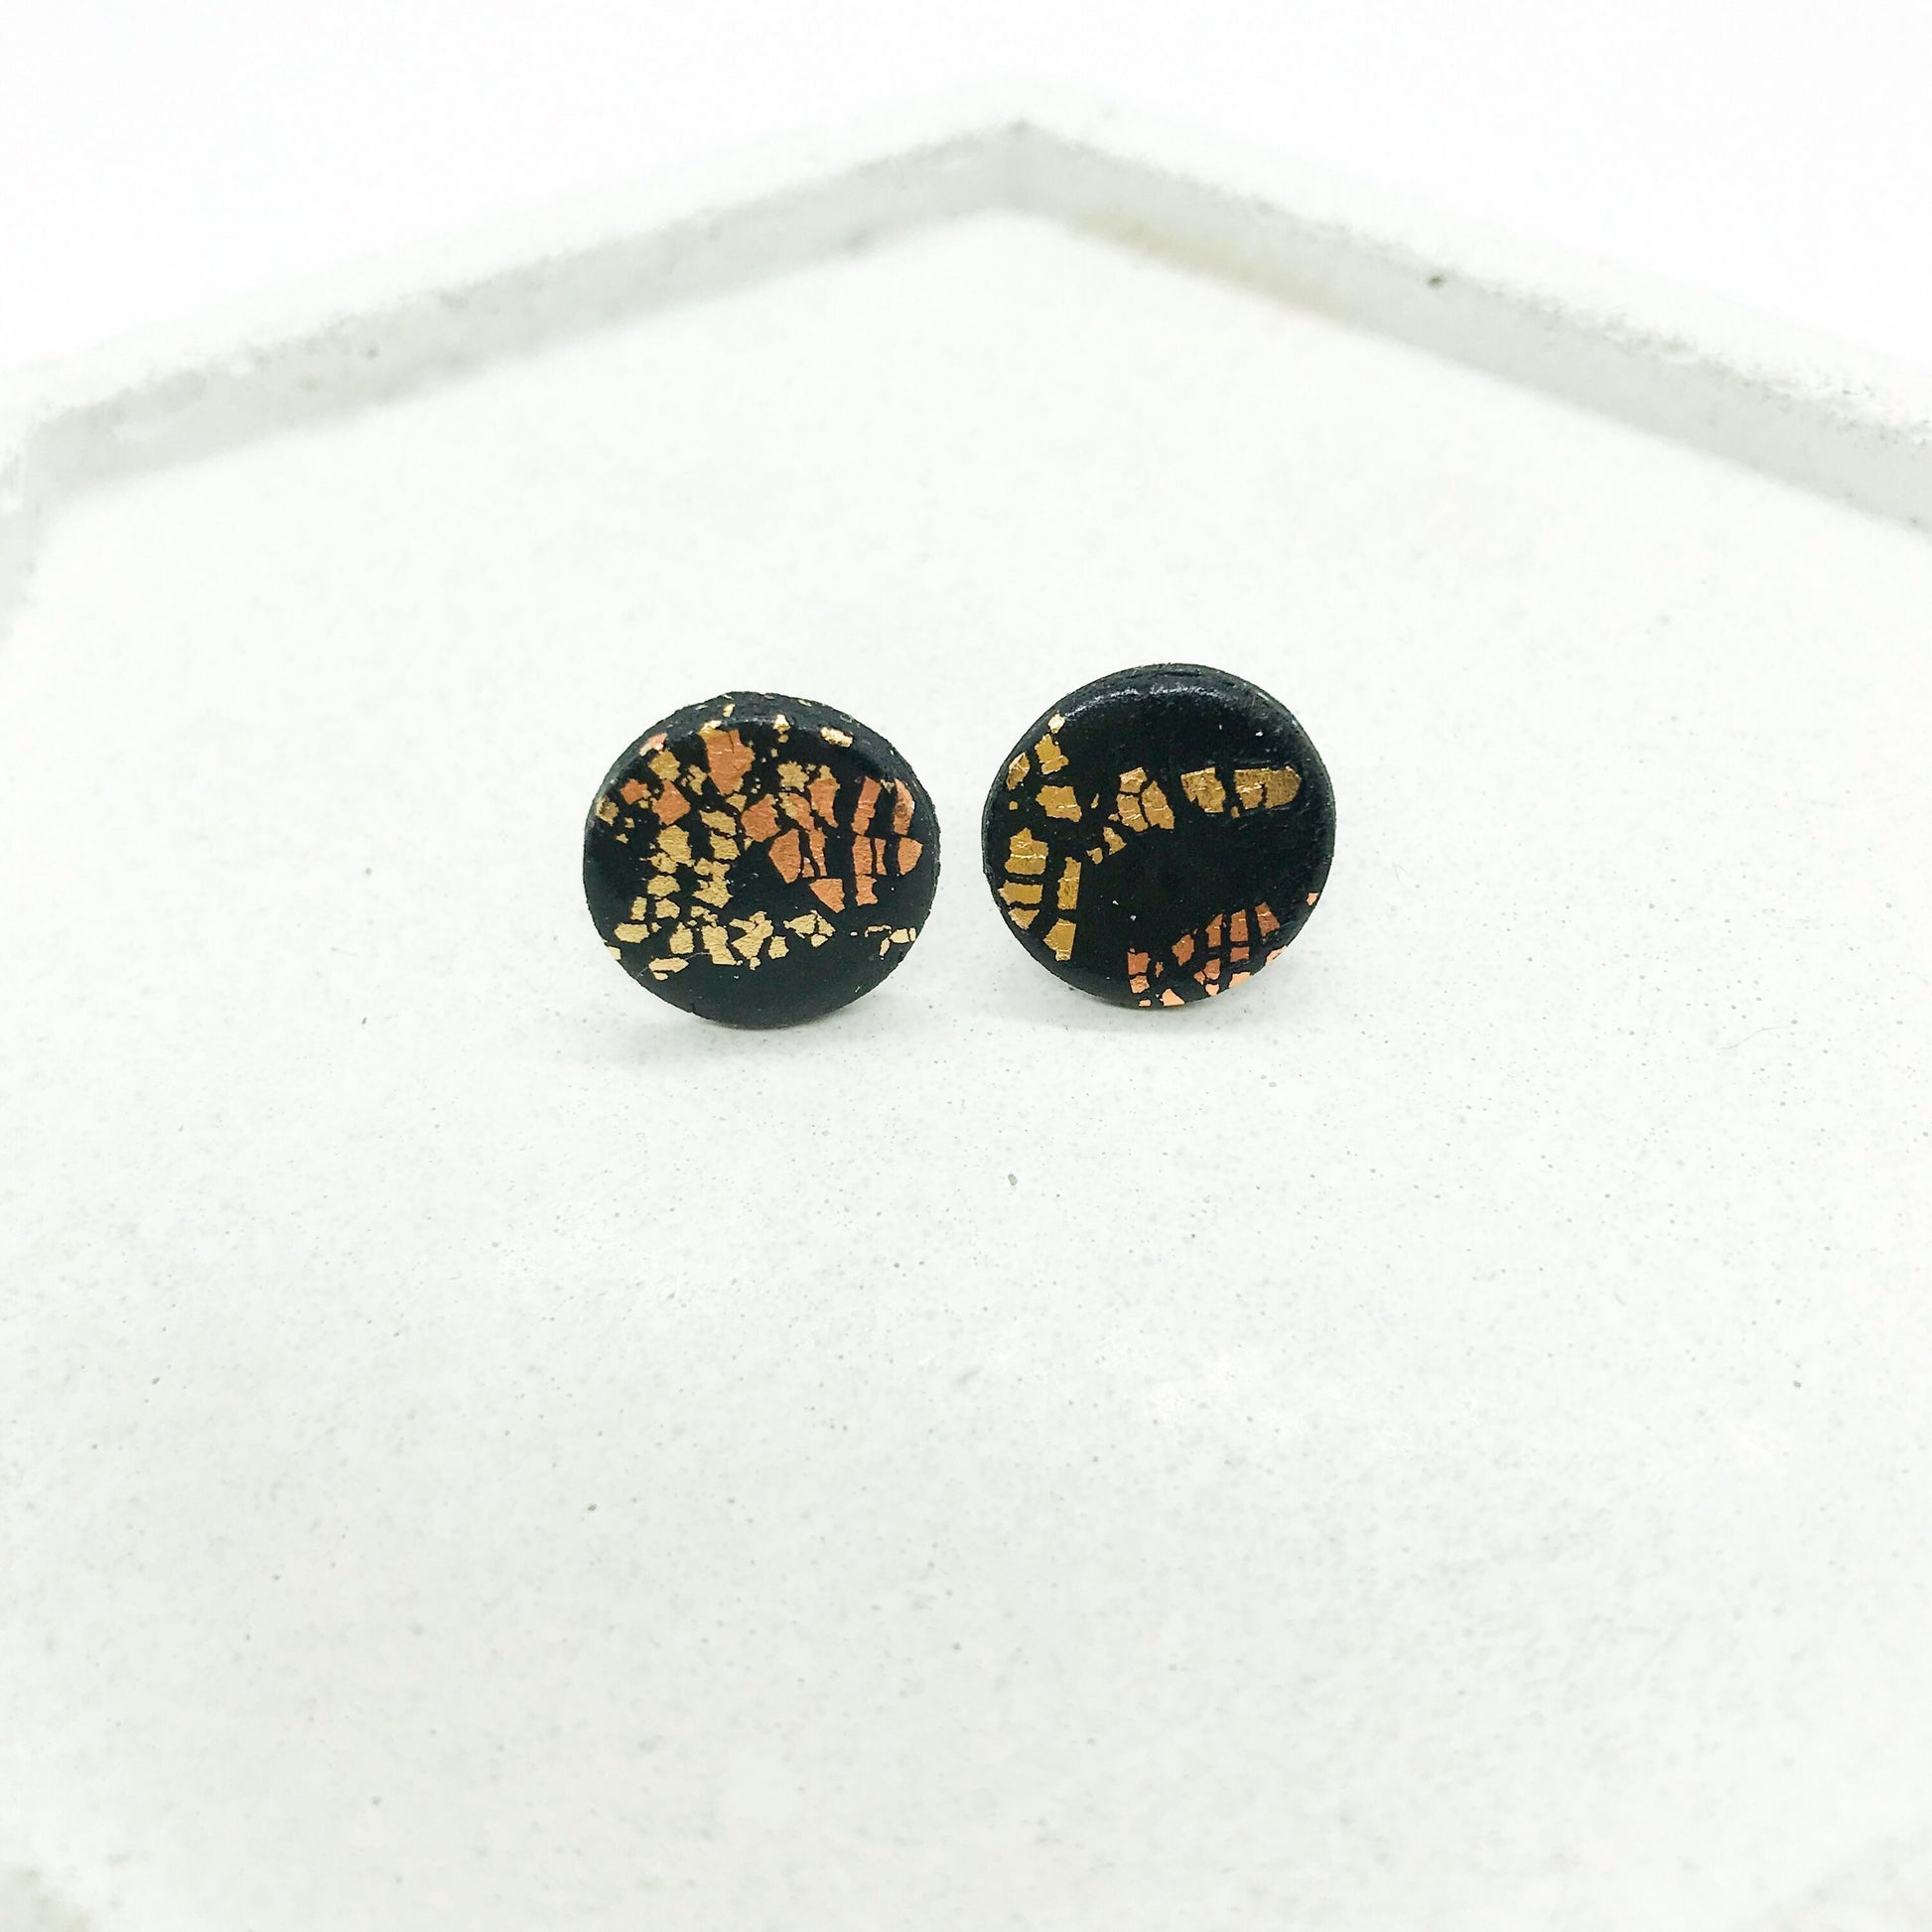 Black Stud Earrings with Green Mosaic, Polymer Clay Stud Earrings, Nat –  Studio Niani